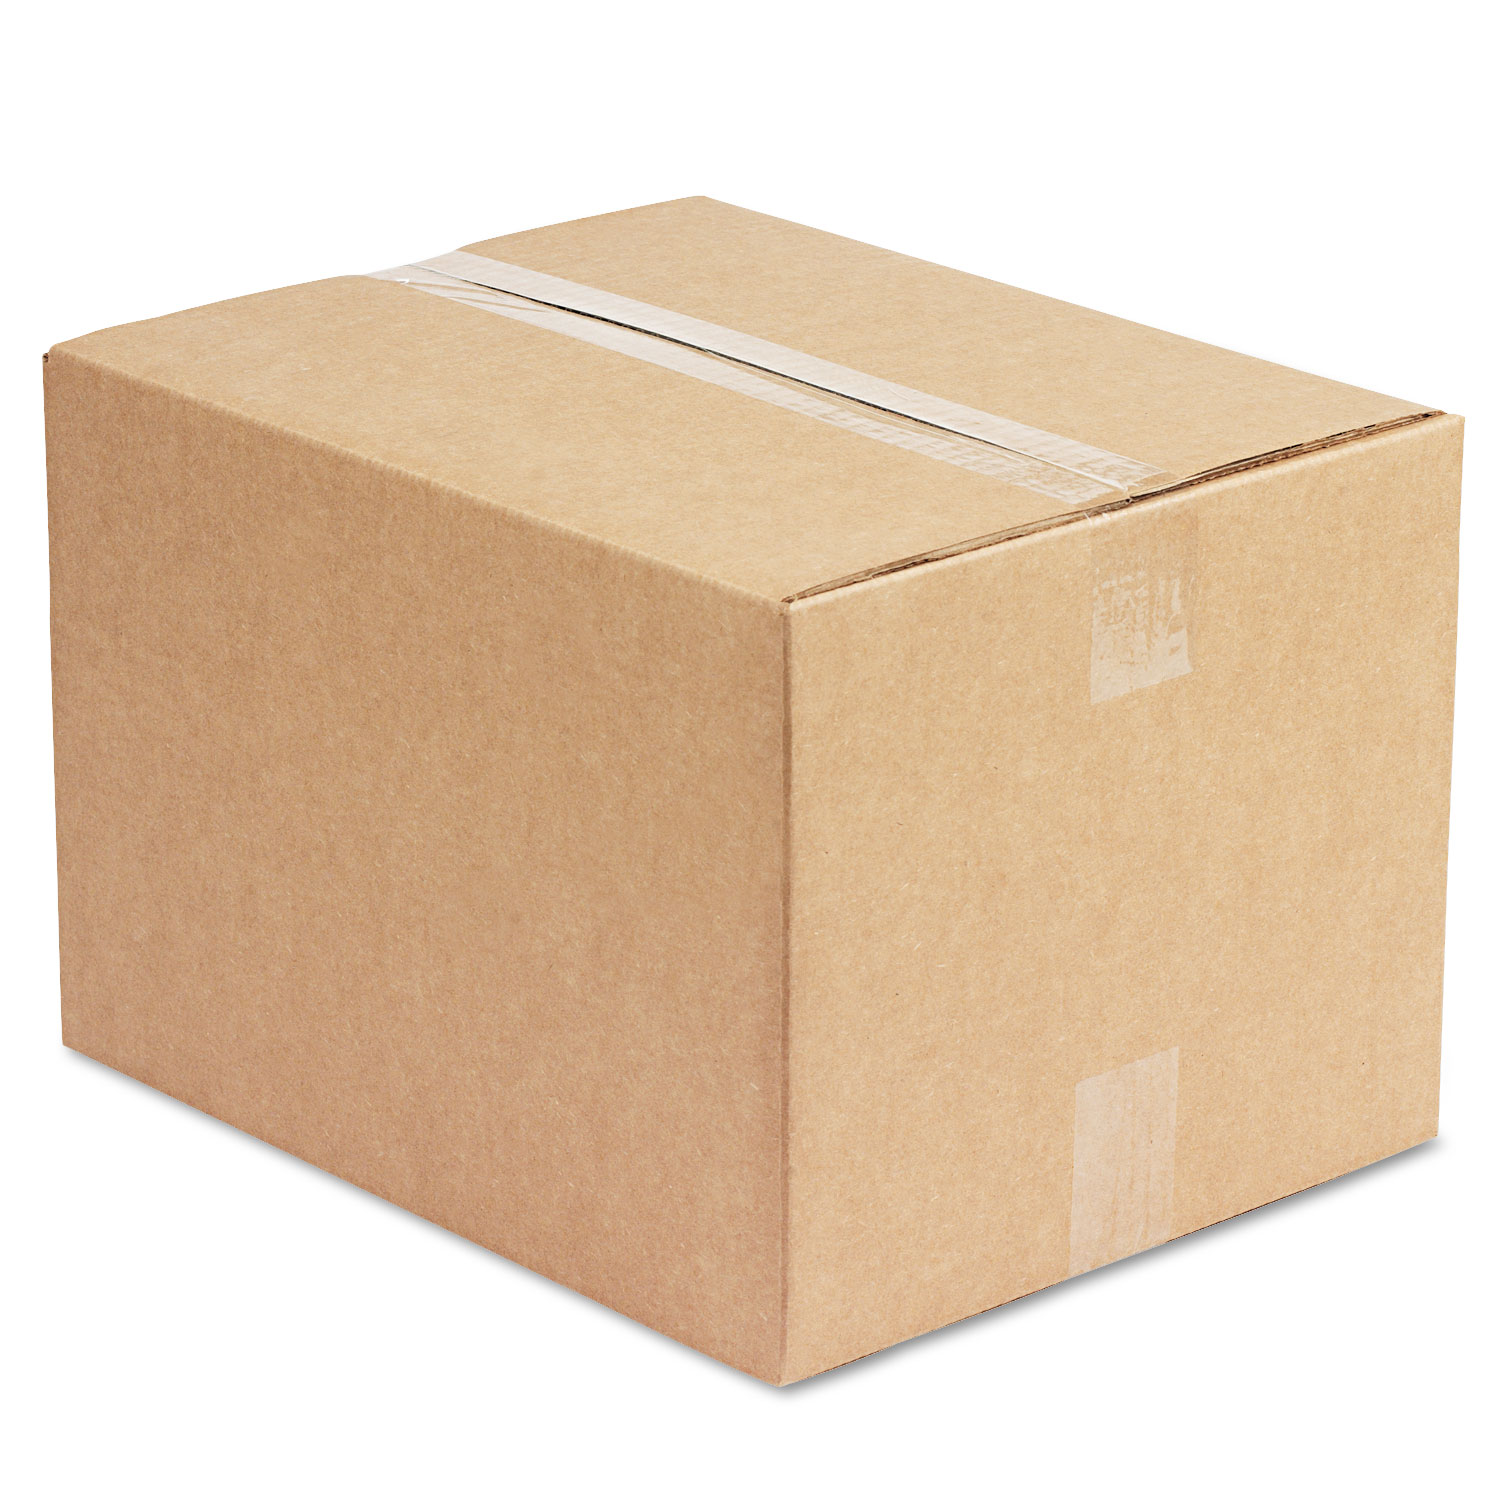 Brown Corrugated - Fixed-Depth Shipping Boxes, 15l x 12w x 10h, 25/Bundle